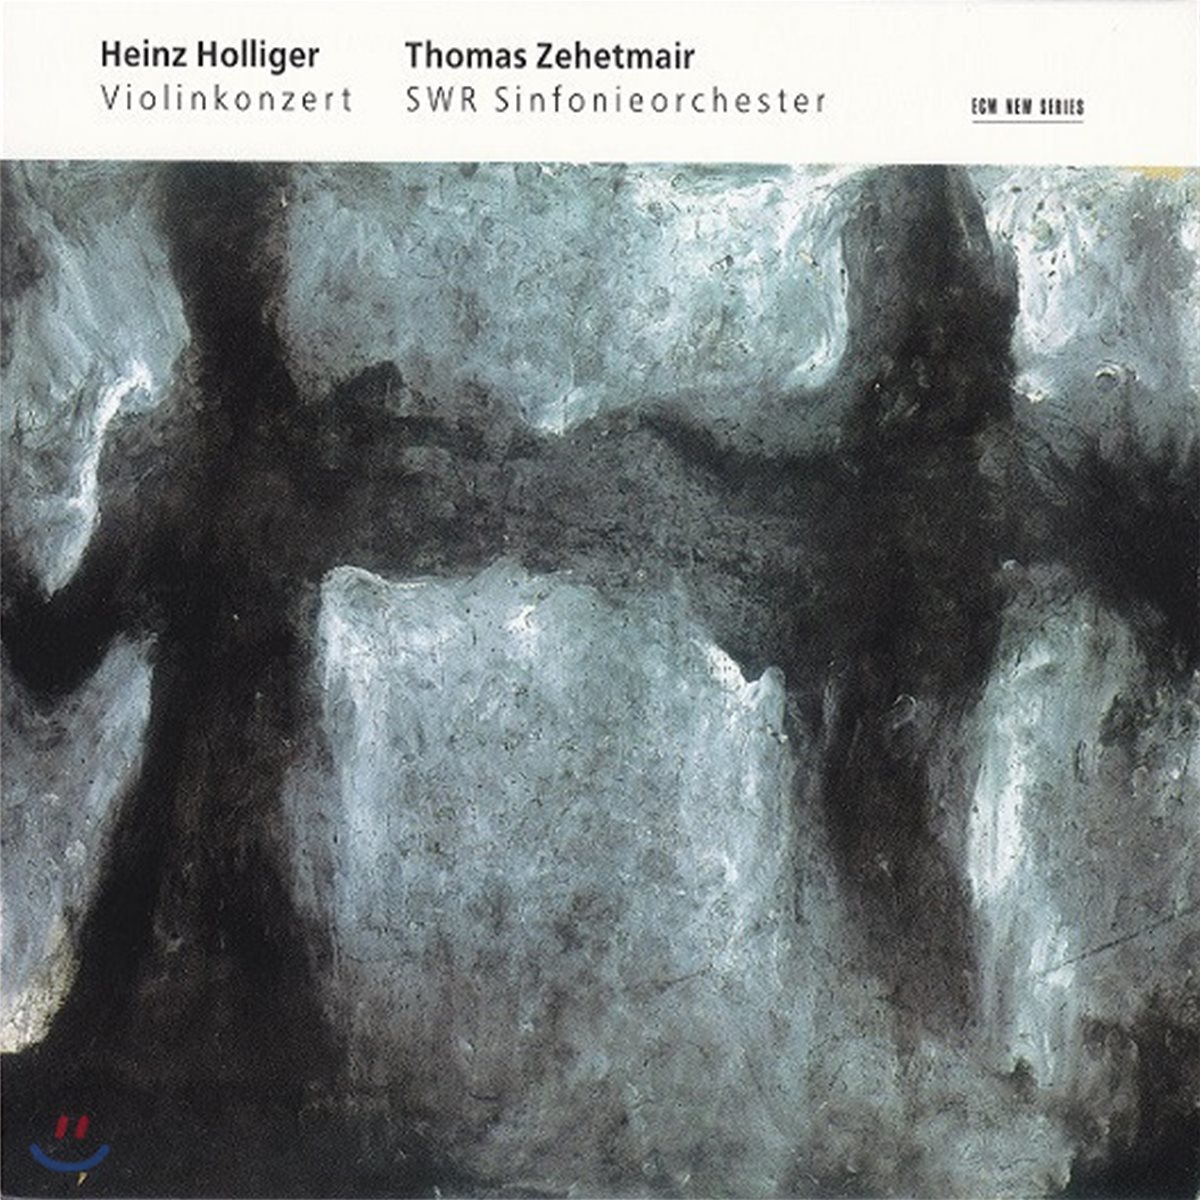 Thomas Zehetmair 하인츠 홀리거: 바이올린 협주곡 / 외젠느 이자이: 소나타 (Heinz Holliger: Violin Concerto / Eugene Ysaye: Sonata)